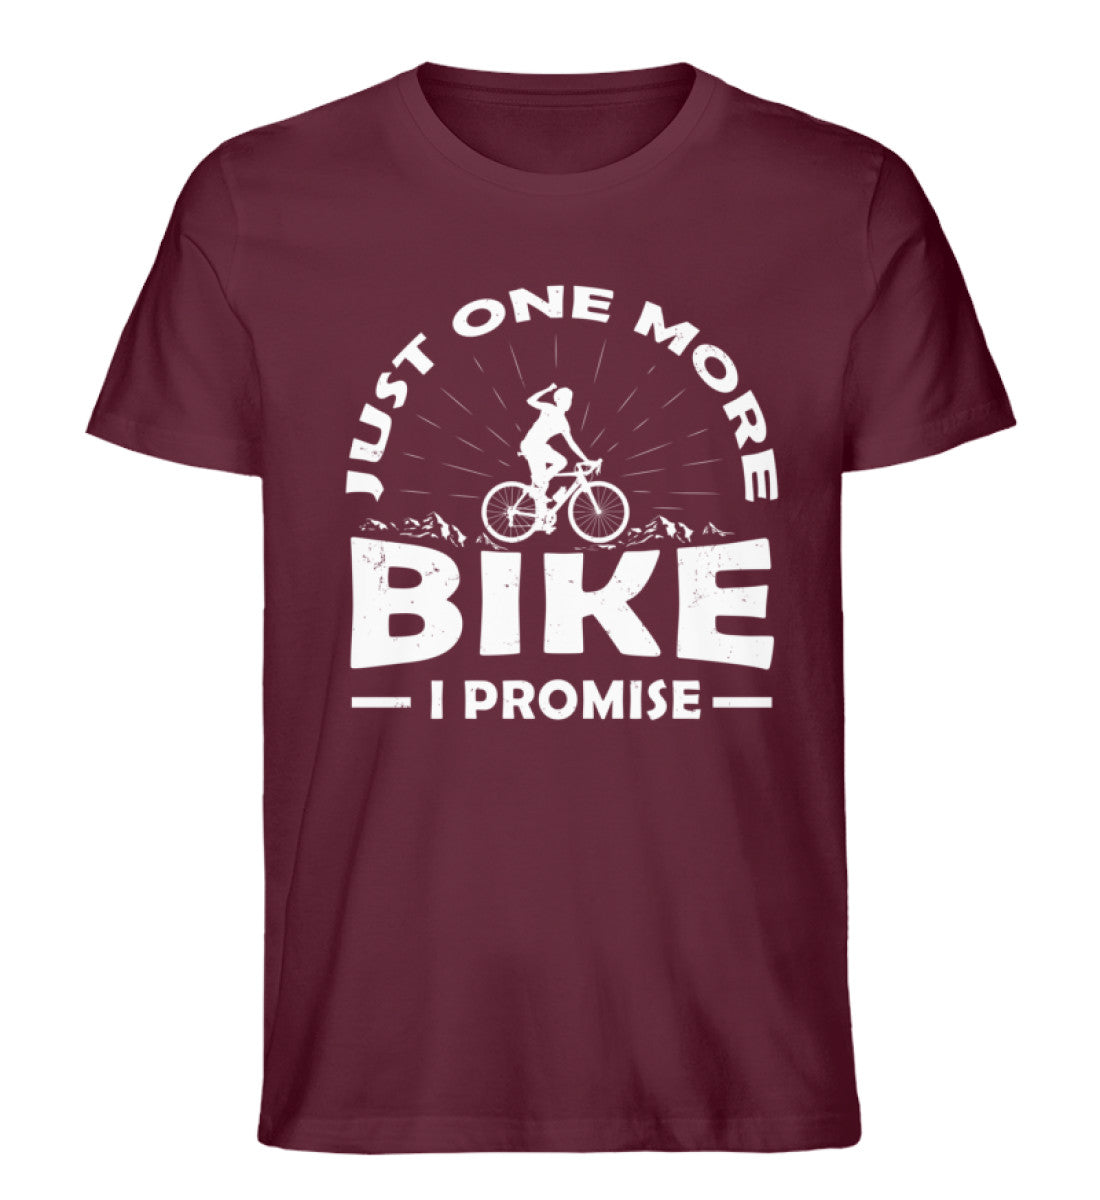 Just one more bike, i promise - Herren Premium Organic T-Shirt fahrrad Weinrot